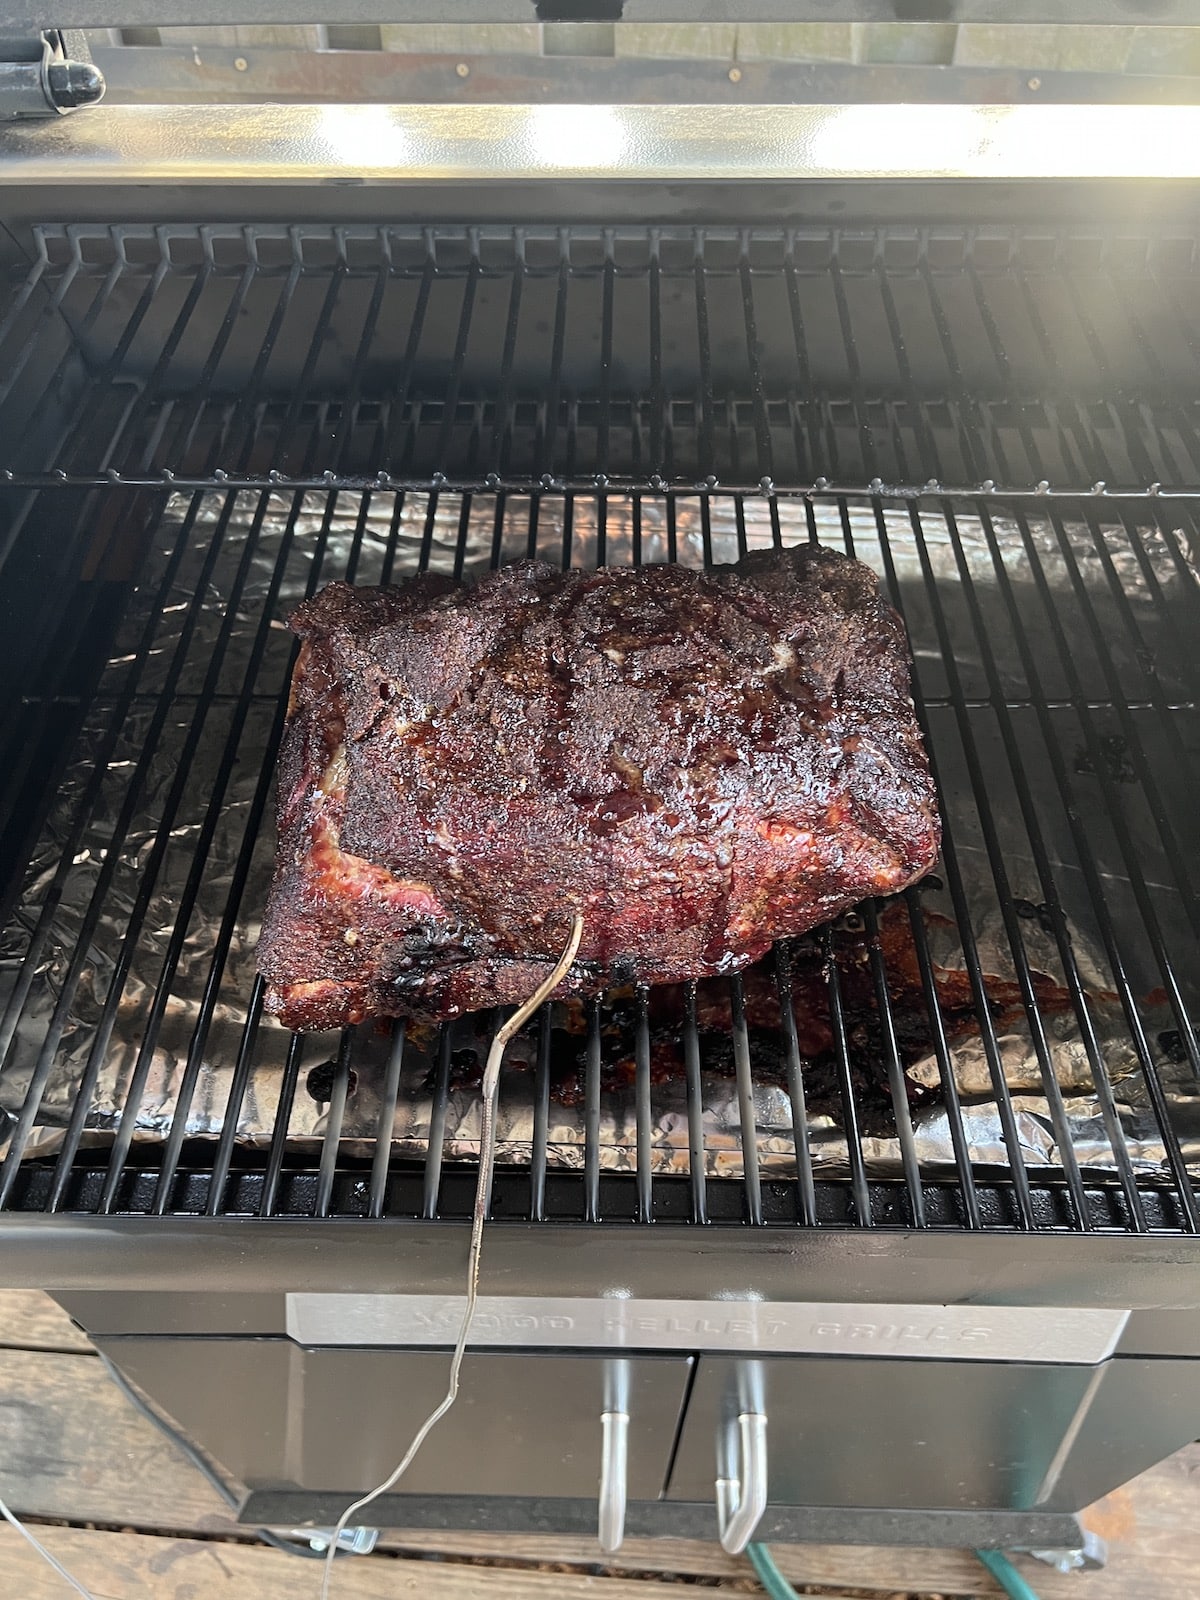 Smoked Pork Butt on a pellet grill.